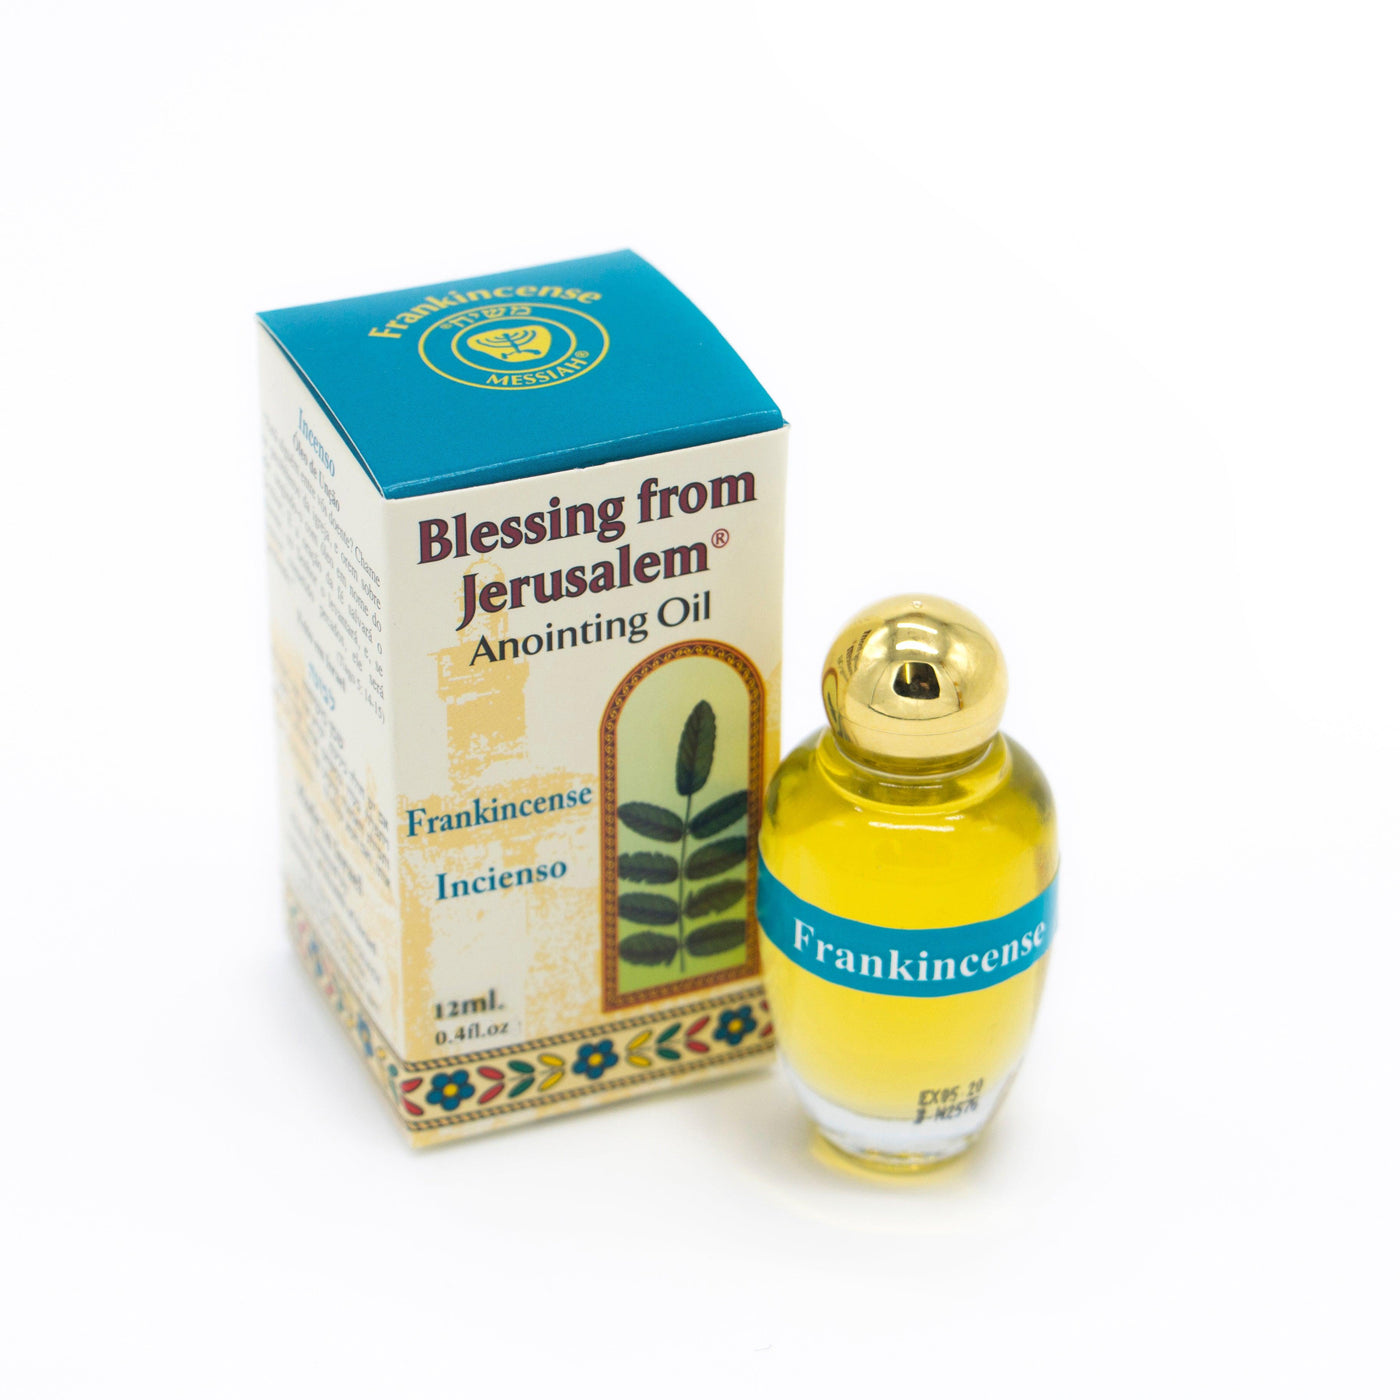 30x Anointing Oil 12ml - 0.4oz Ein Gedi From Holyland Jerusalem - Spring Nahal